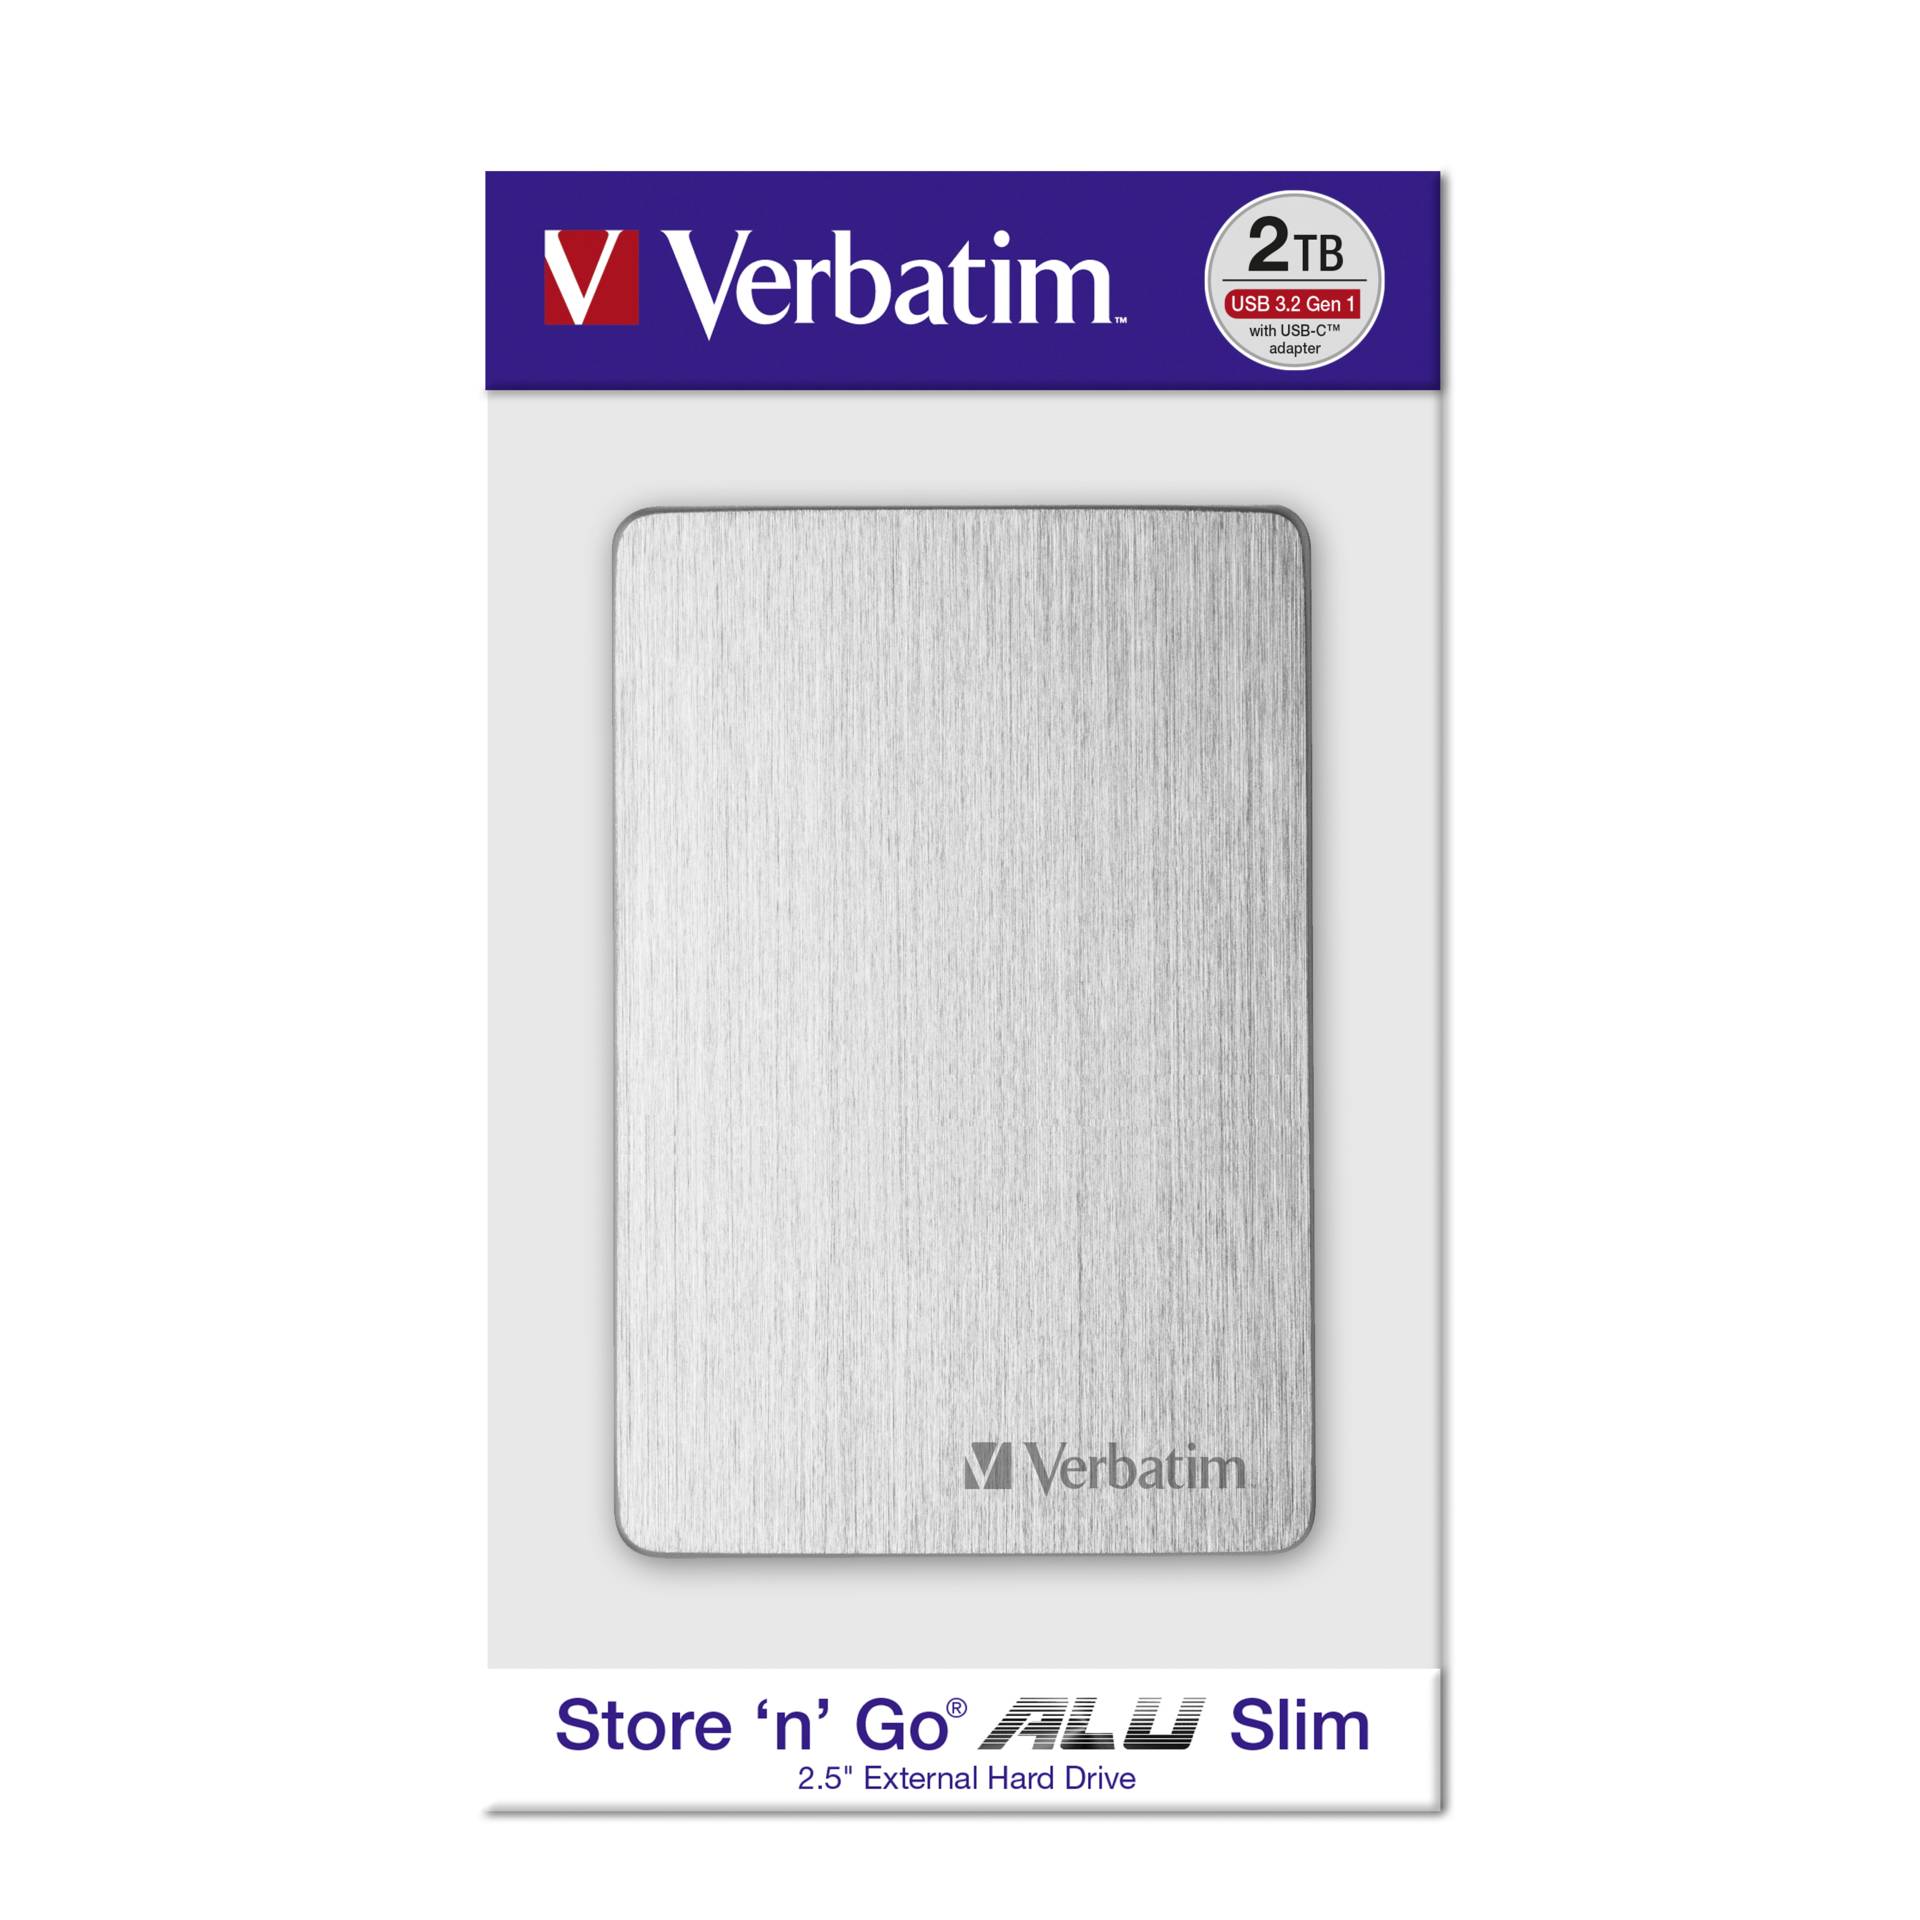 Verbatim Store n Go ALU Slim Portable Festplatte 2 TB Silber